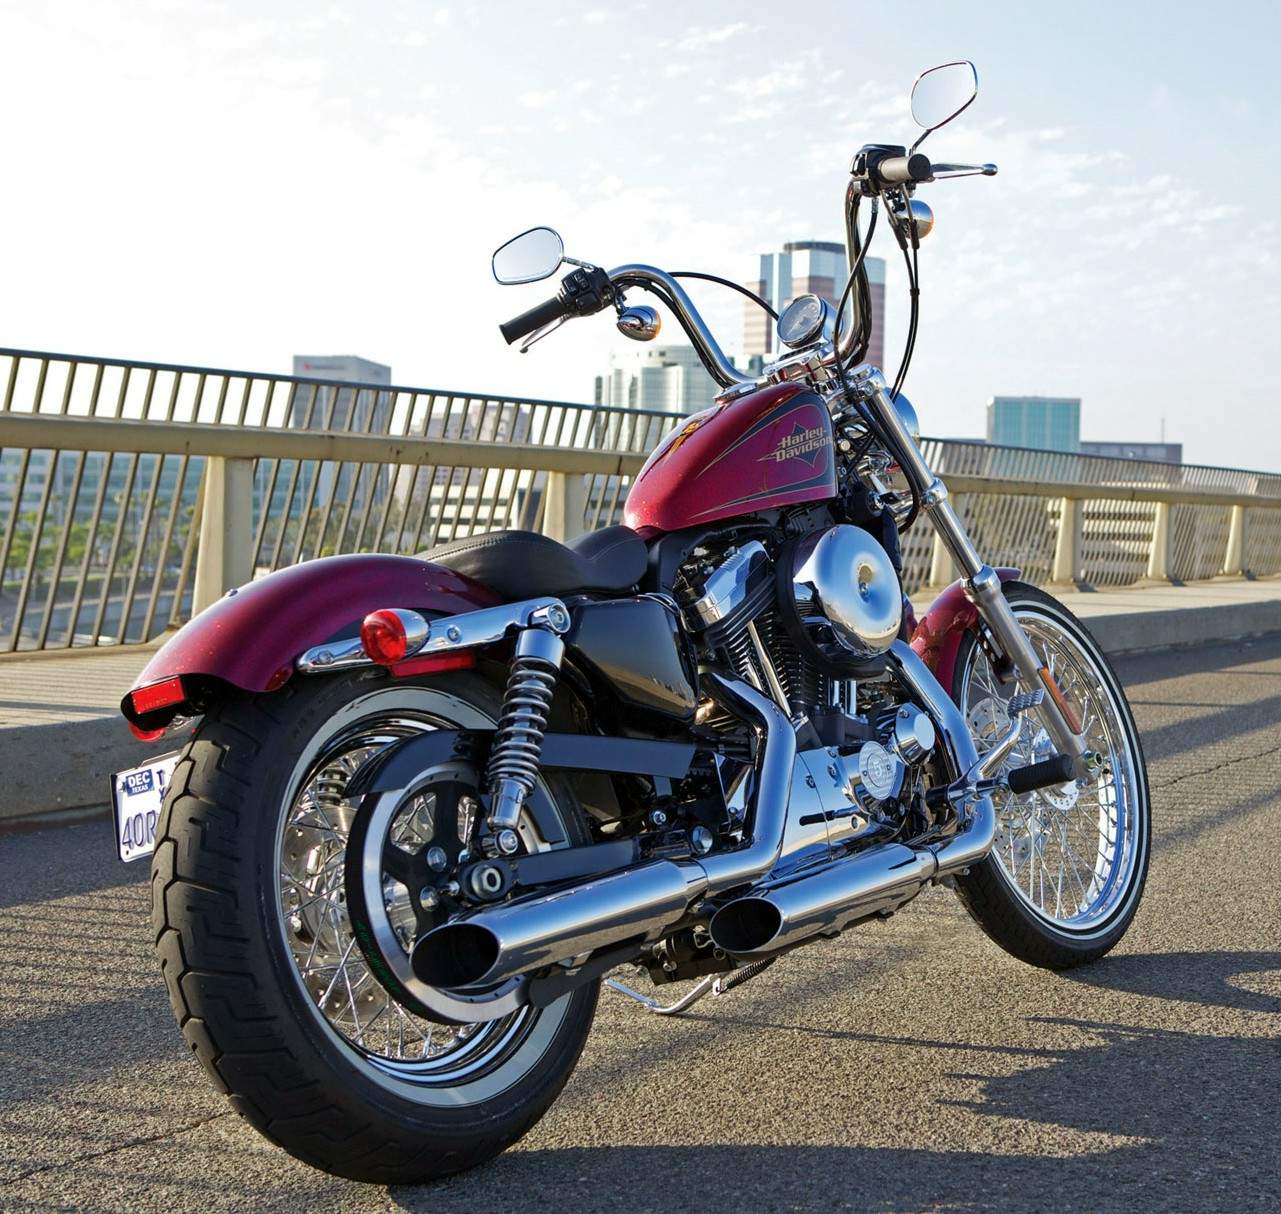 Мотоцикл Harley Davidson XL 1200V Seventy Two 2013 фото